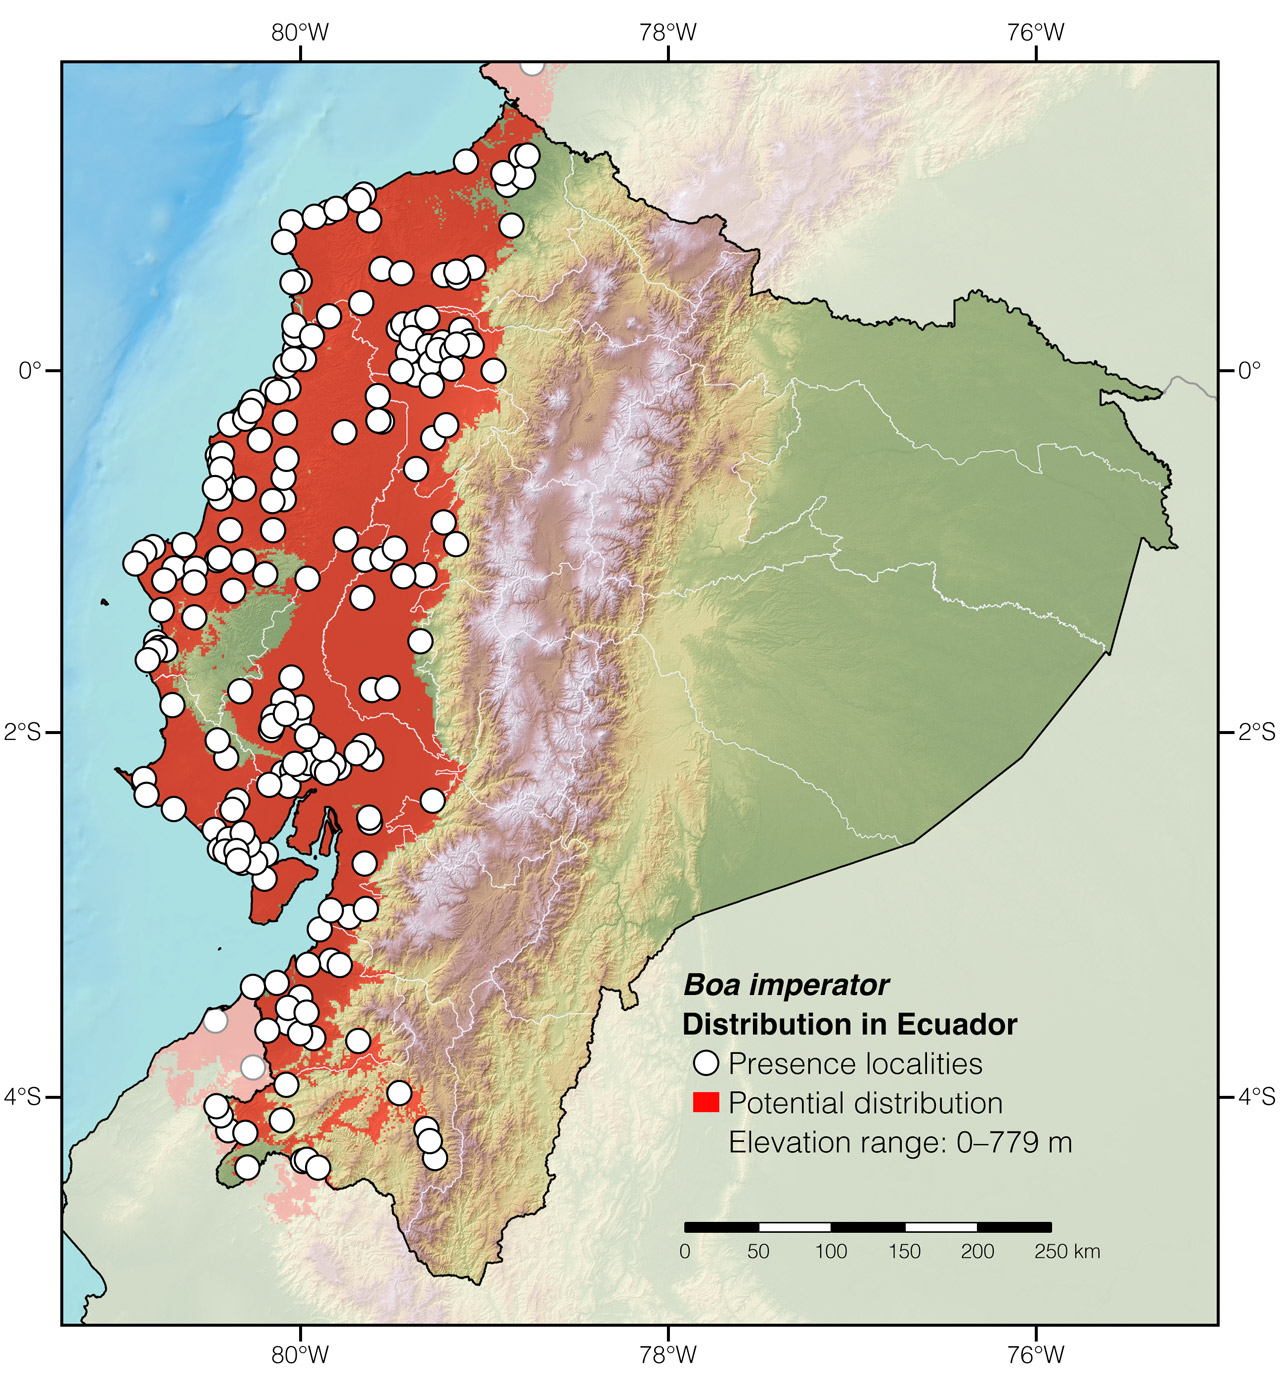 Distribution of Boa imperator in Ecuador